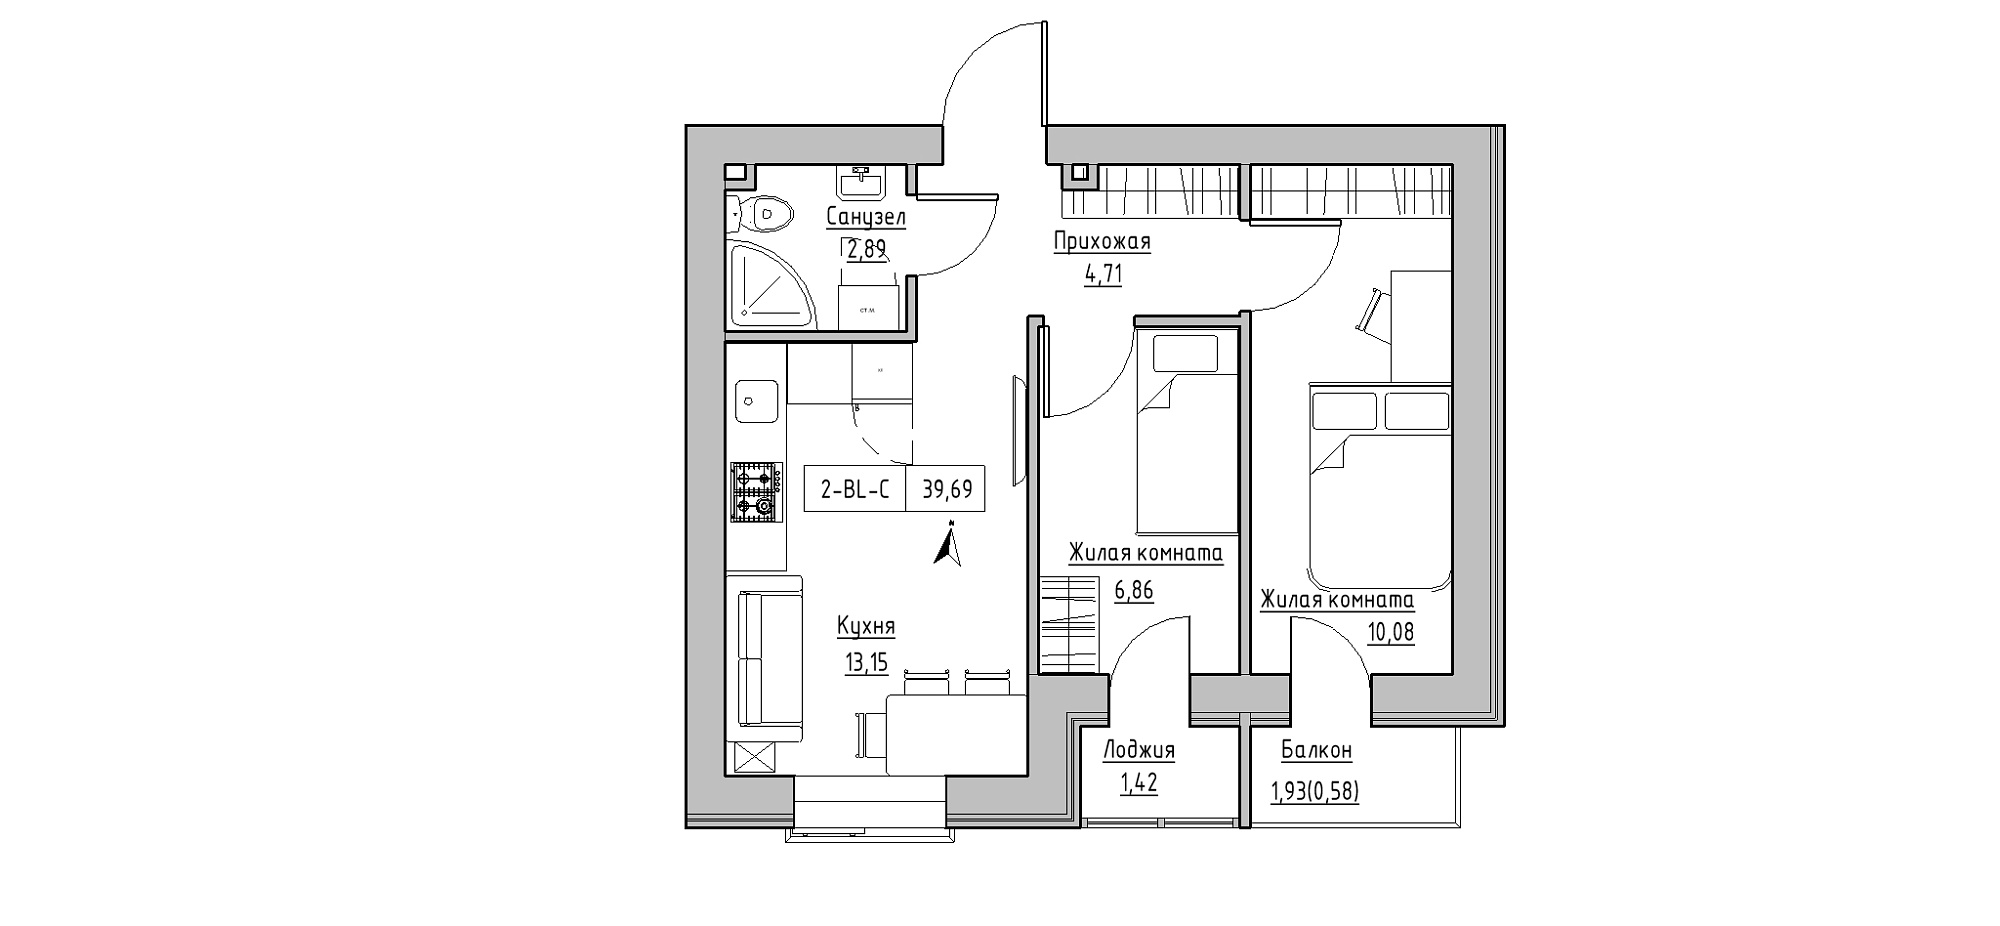 Planning 2-rm flats area 39.69m2, KS-020-02/0005.